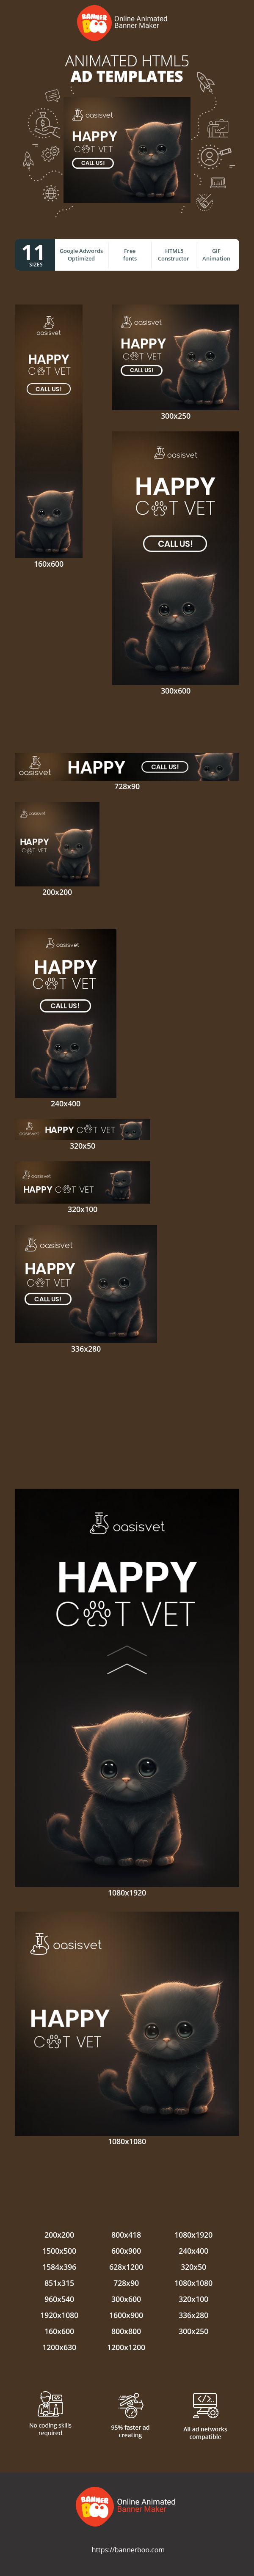 Шаблон рекламного банера — Happy Cat Vet — Veterinary Clinic